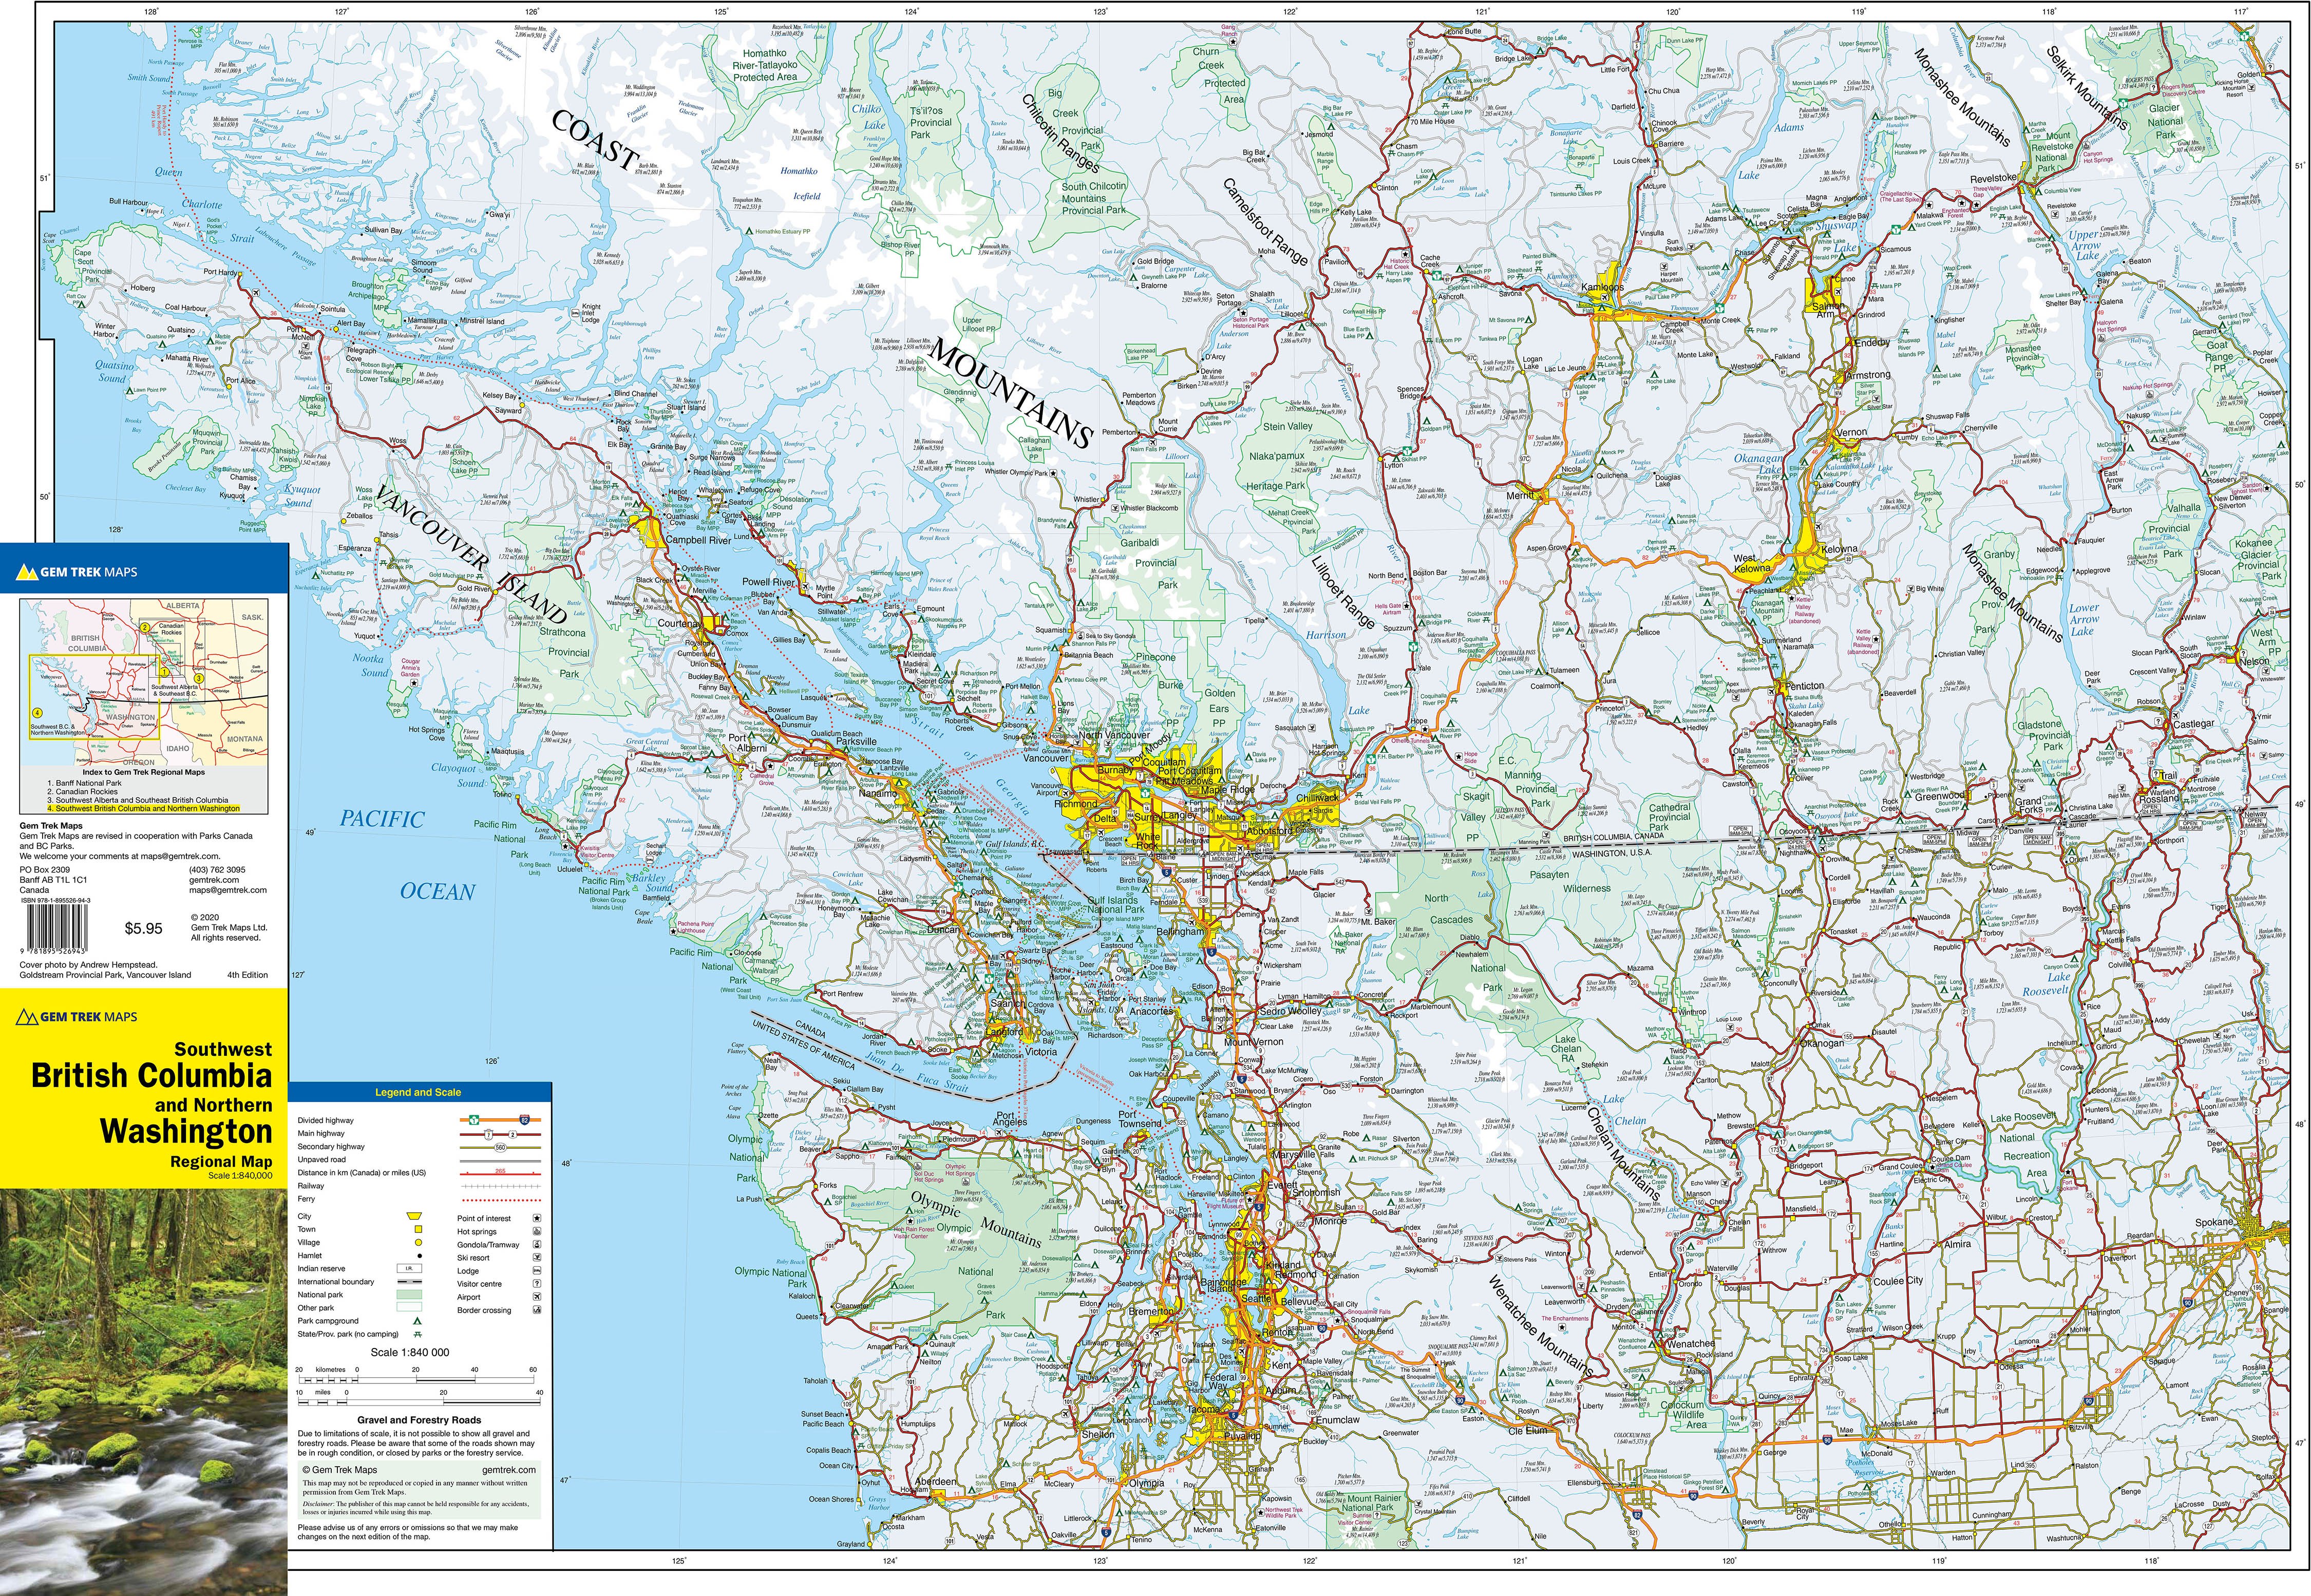 Southwest British Columbia Northern Washington Map